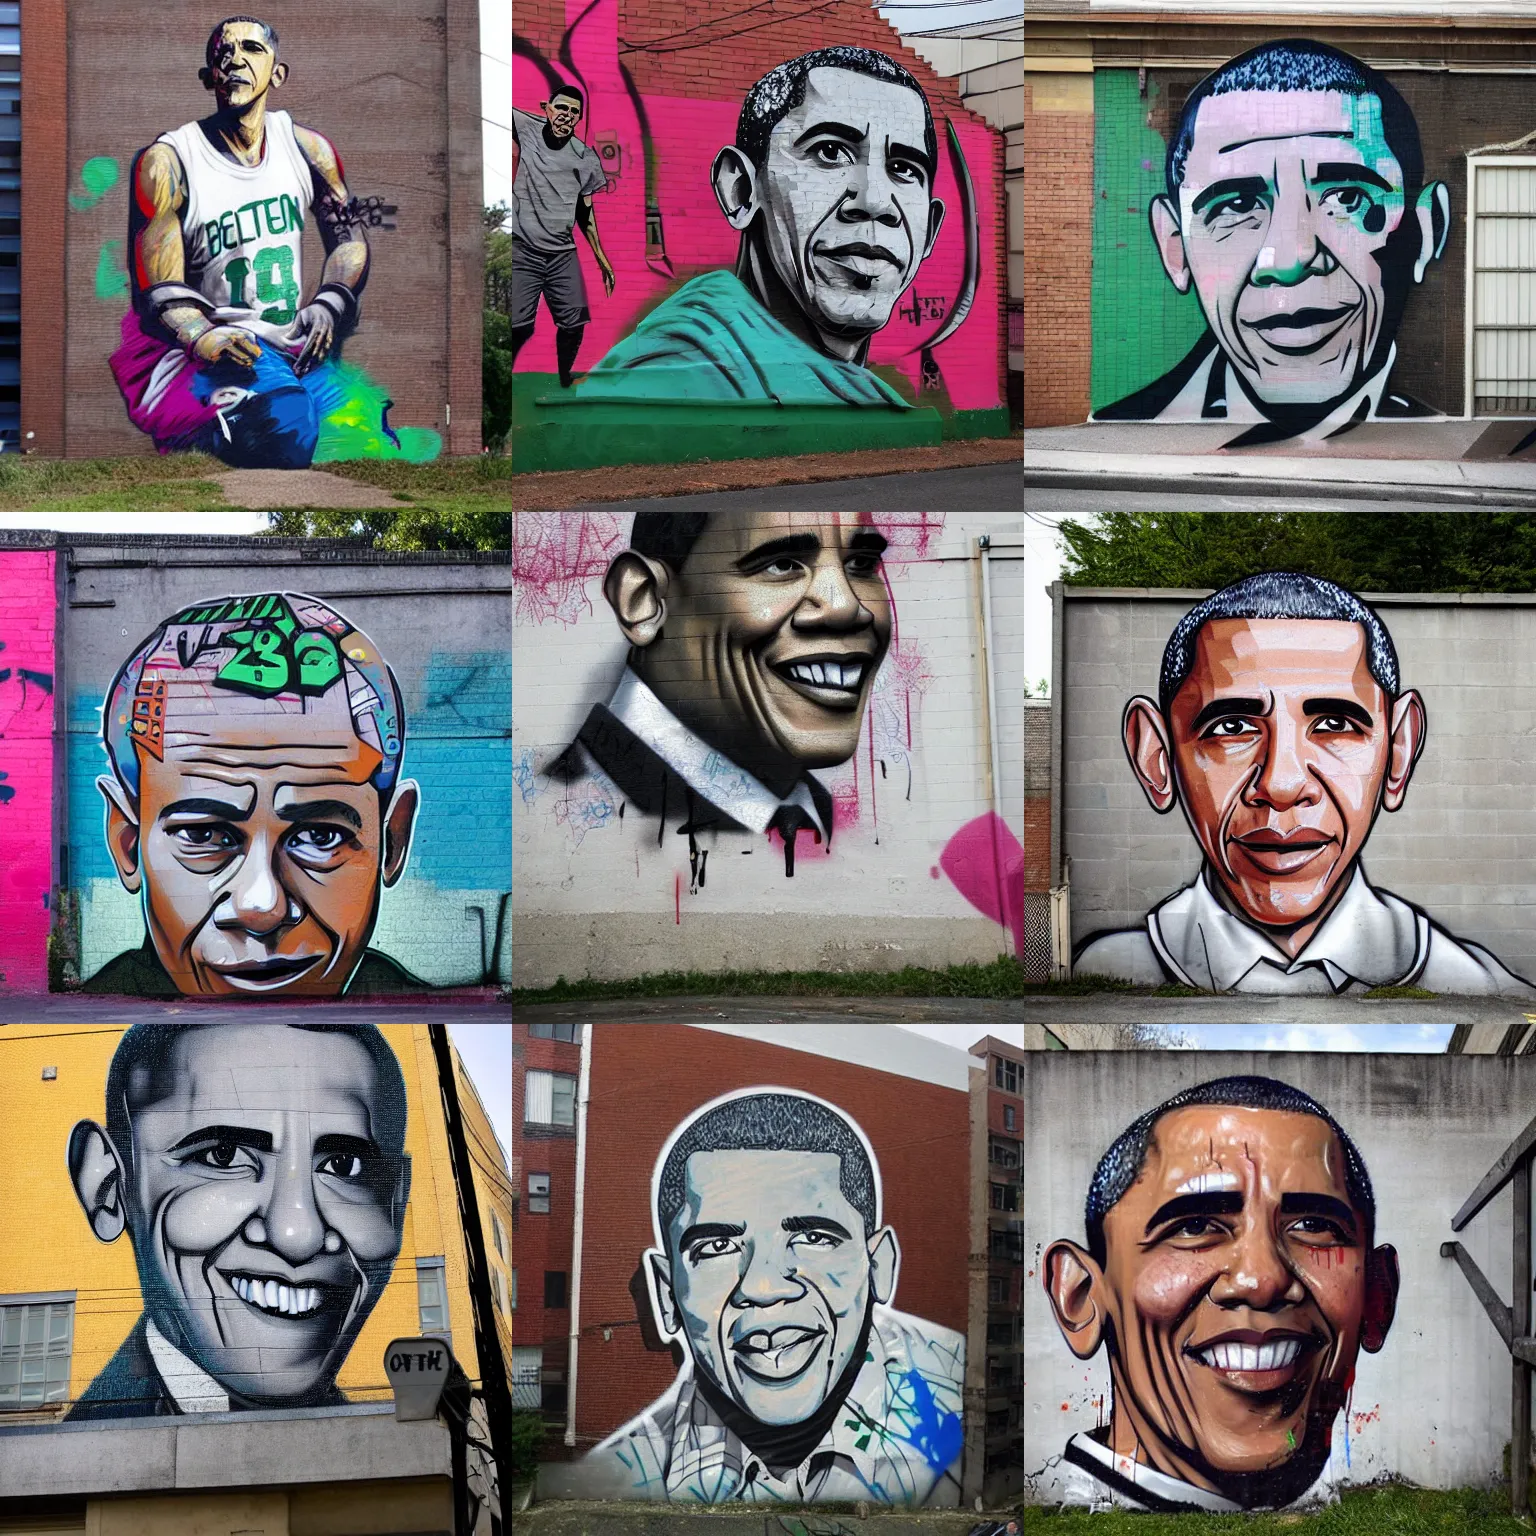 Prompt: Urban Graffiti, Fat Out of Shape Boston Celtics player Barack Obama, by Banksy Okamura and Bordalo, trending on Artstation